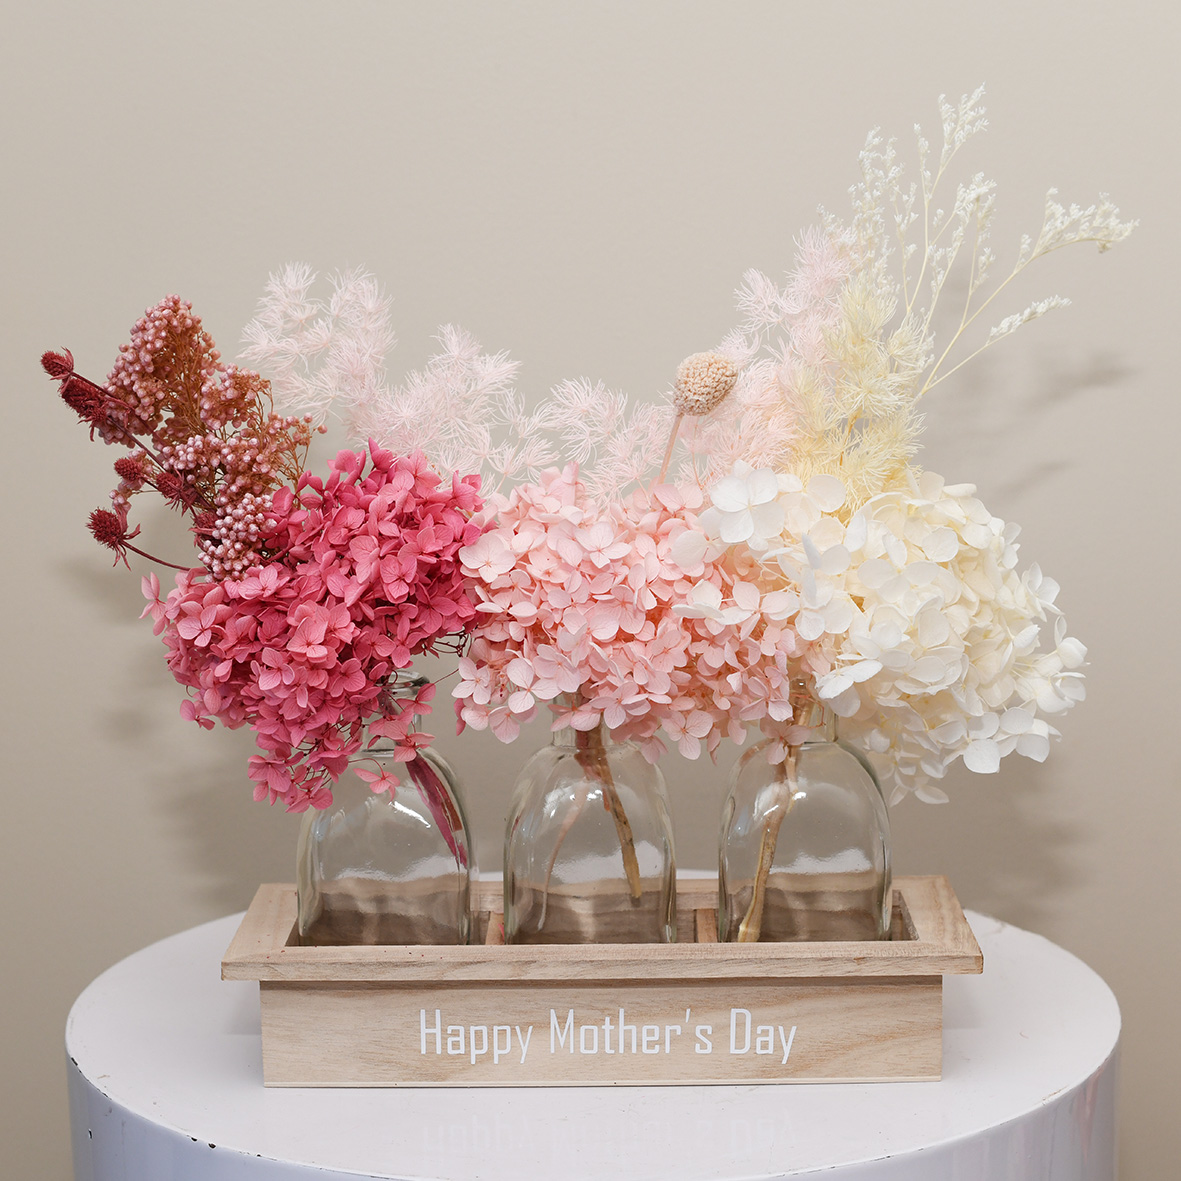 Mother's Day Dried Flower Arrangements in a Vase - Sydney